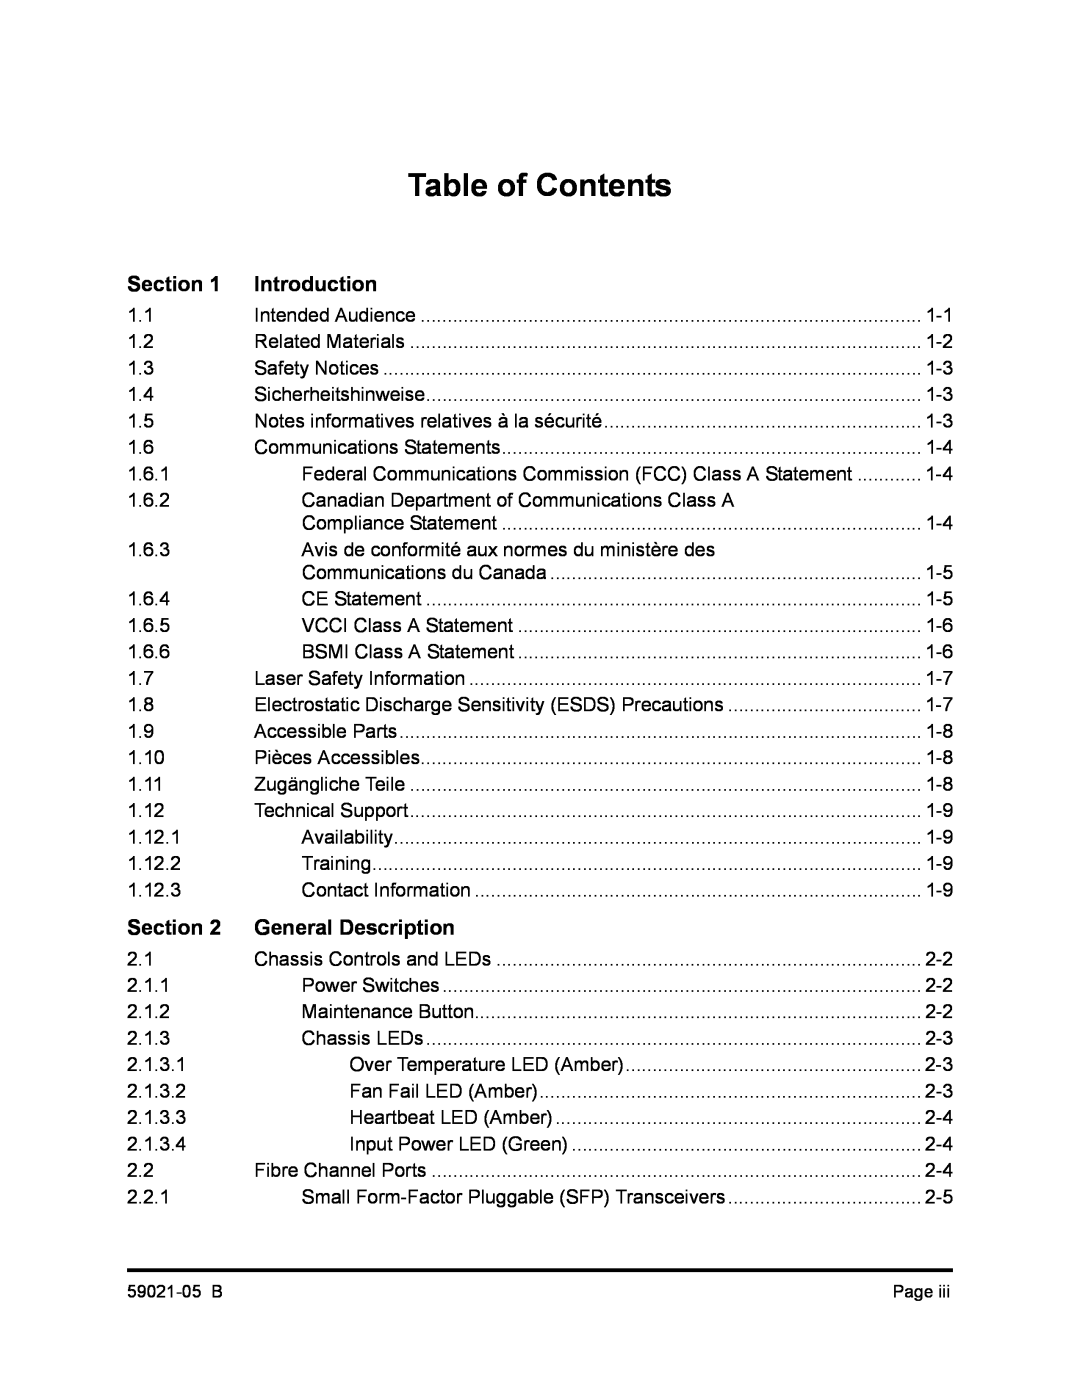 Q-Logic 59021-05 B manual Section, Introduction, General Description, Table of Contents 